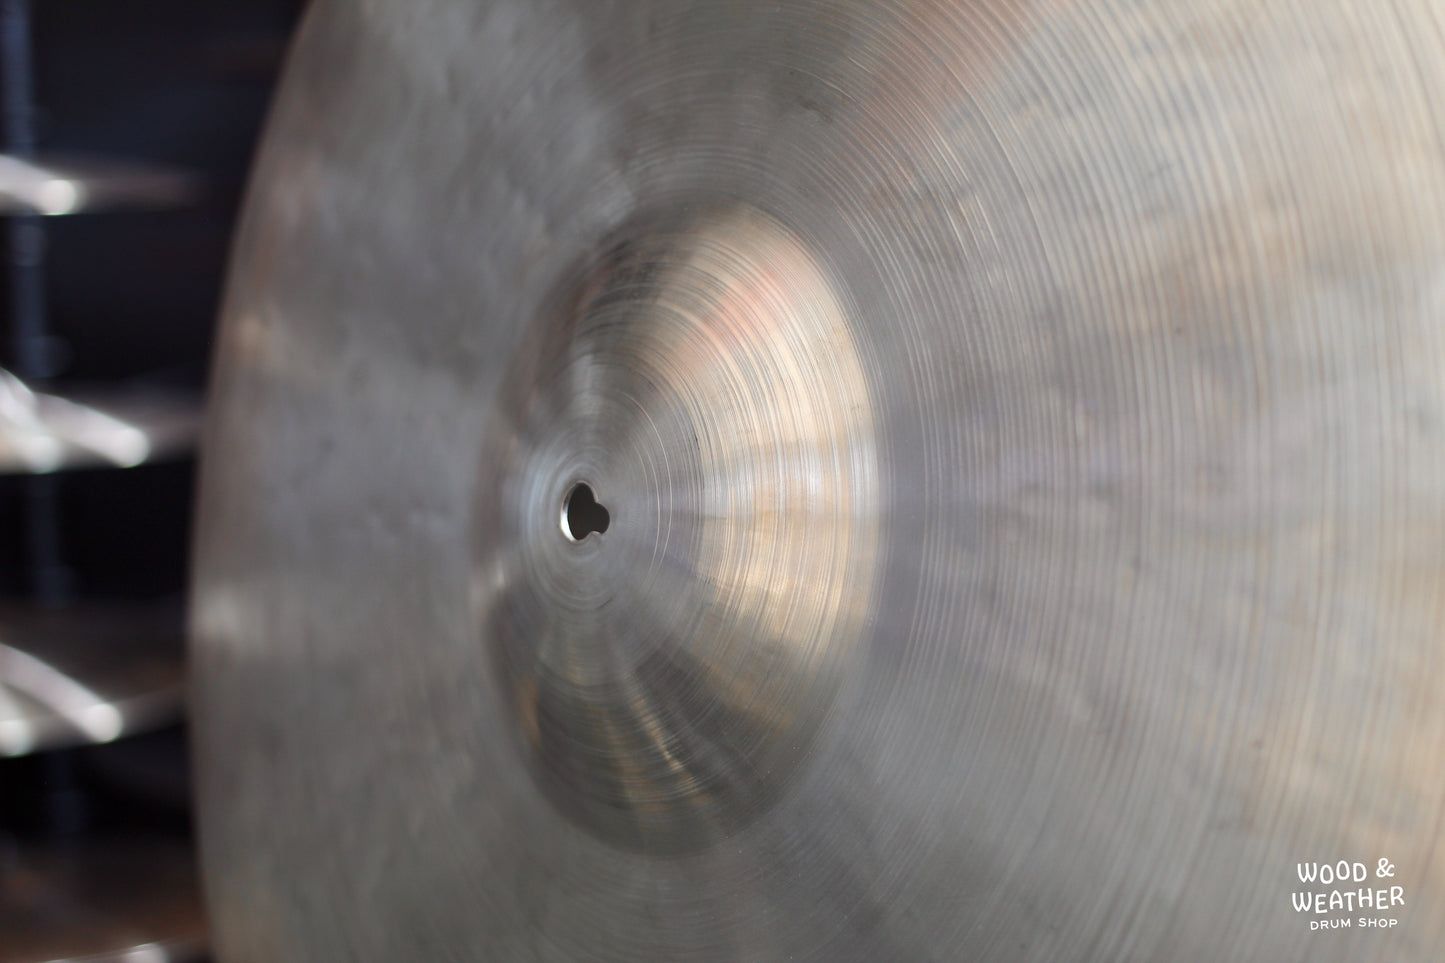 Jesse Simpson Cymbals 60s A. Zildjian 20" Reworked Ride Cymbal 2382g